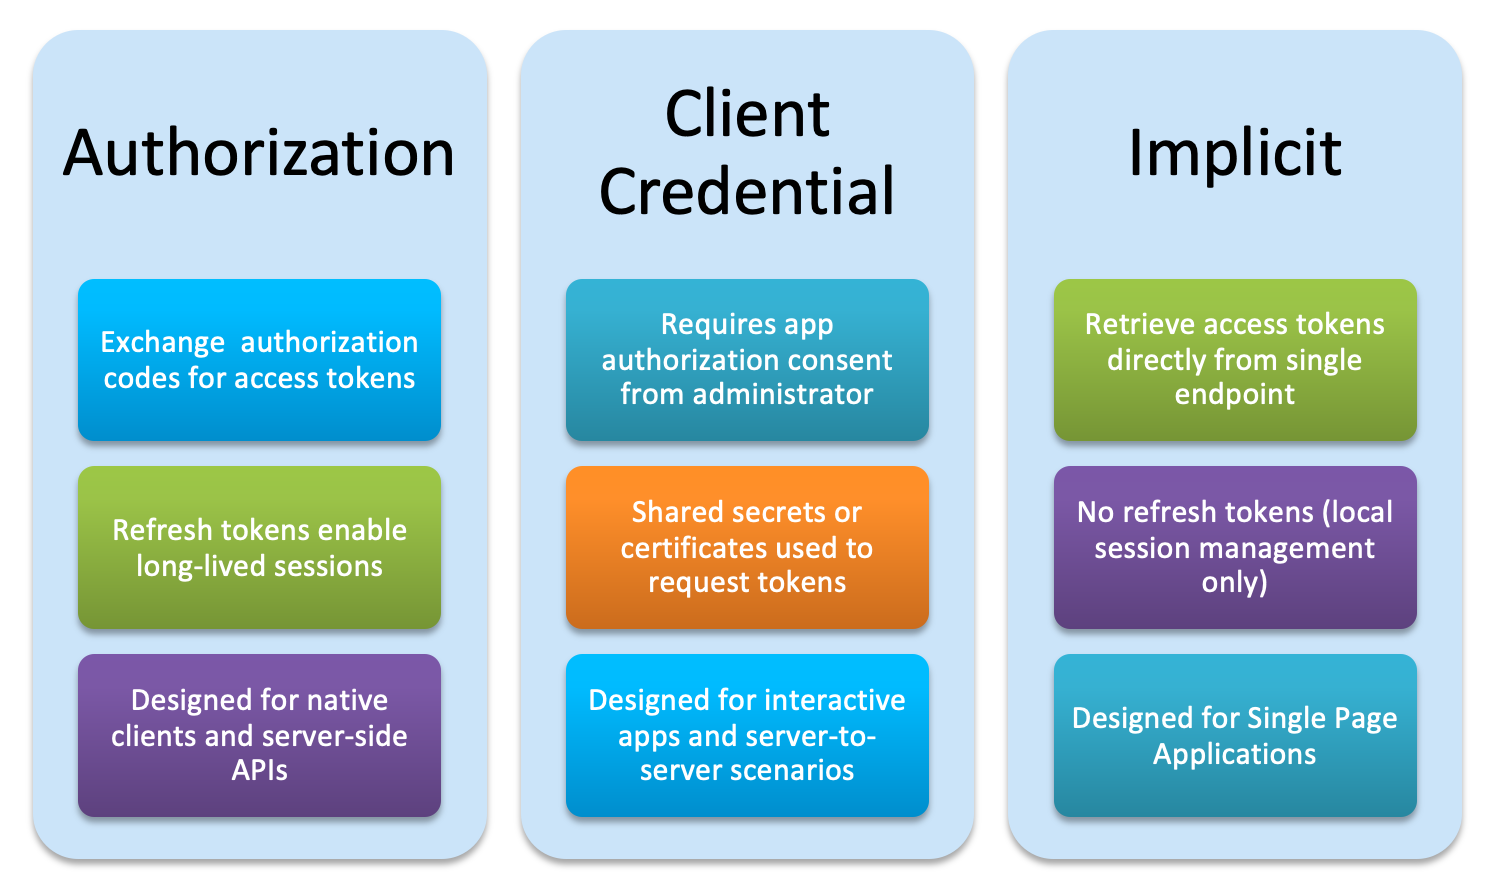 This block diagram illustrates the Authorization, Client Credential, and Implicit OAuth grant types.